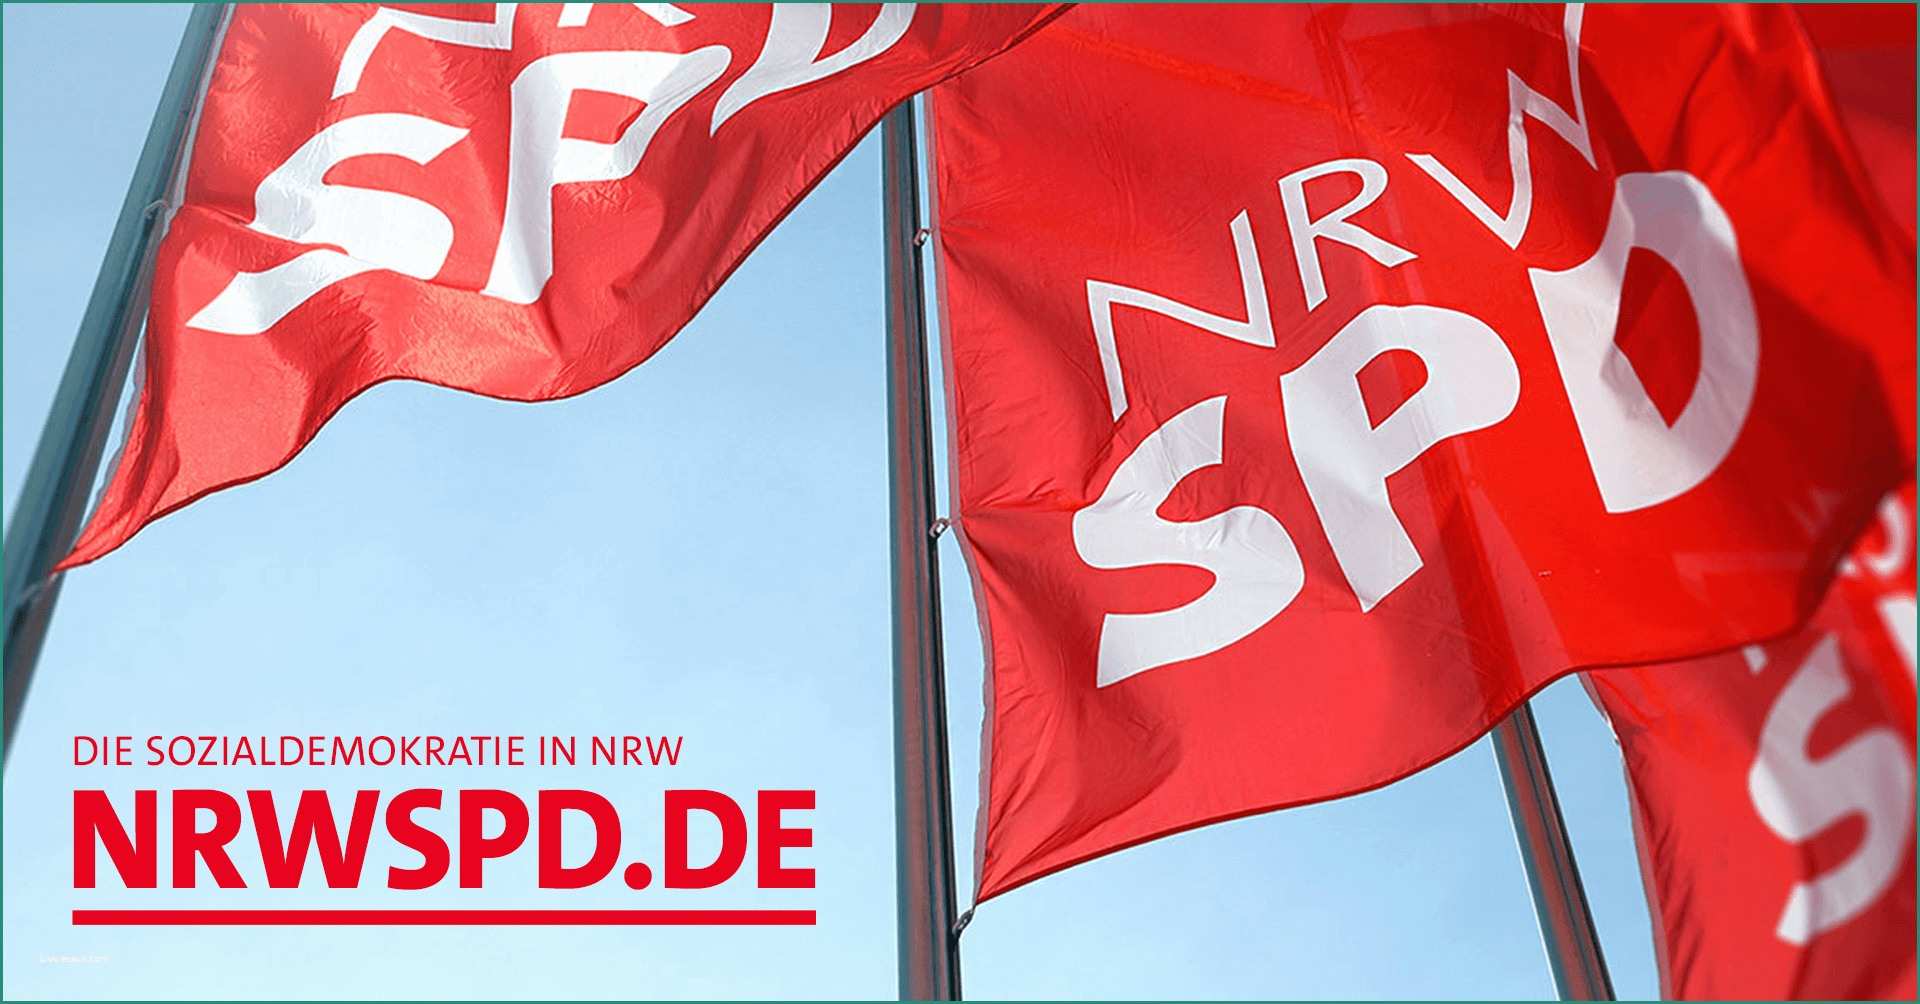 My Vodafone Fai Da Te E Nrwspd – Die sozialdemokratie In Nrw